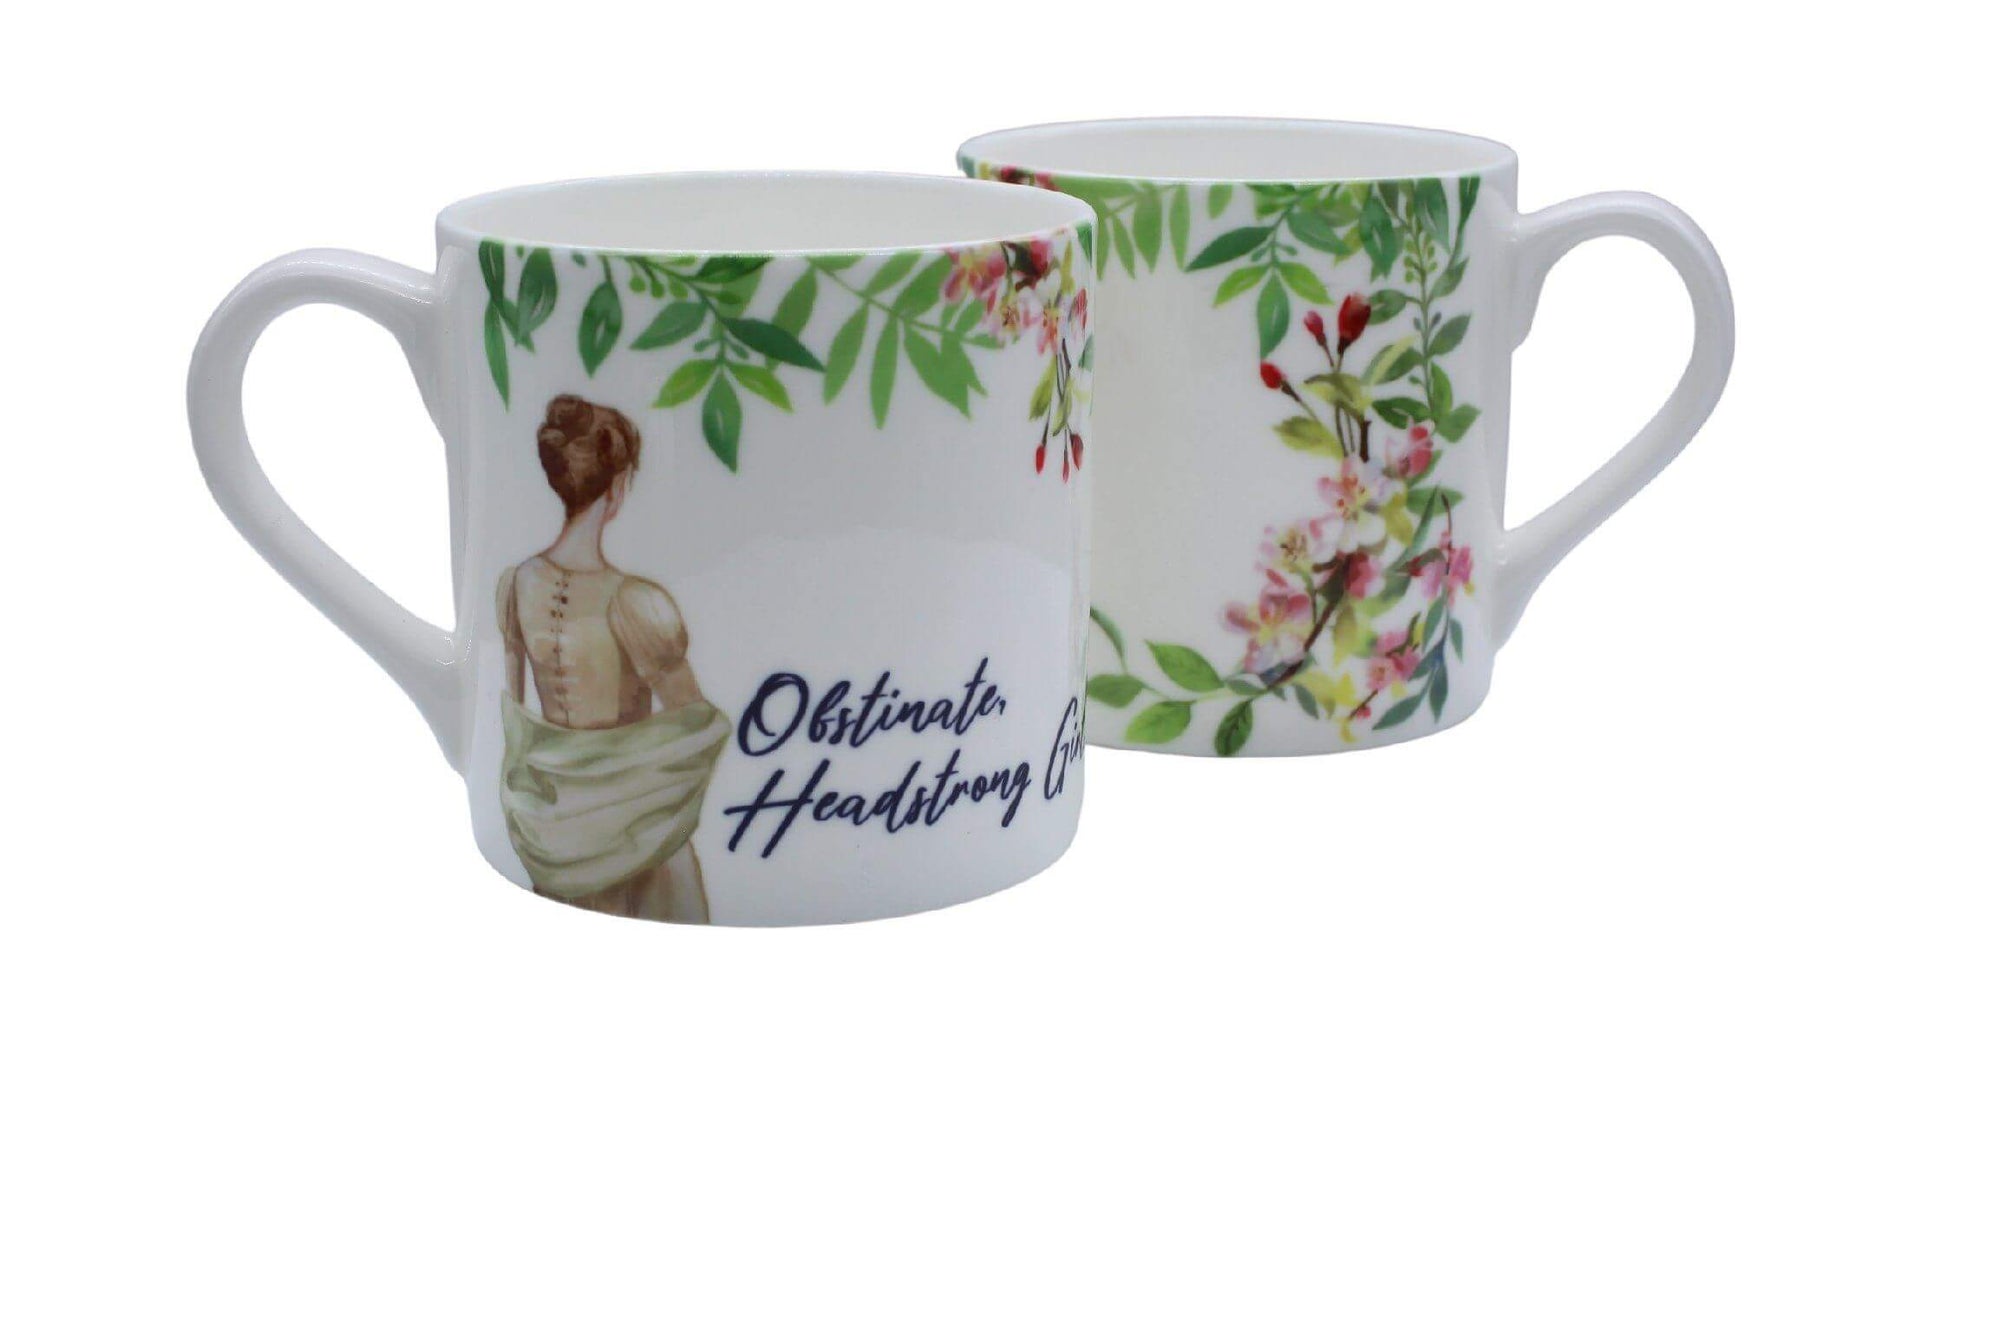 Obstinate, Headstrong Girl! (Jane Austen)  Mug Mugs Mustard and Gray Ltd Shropshire UK